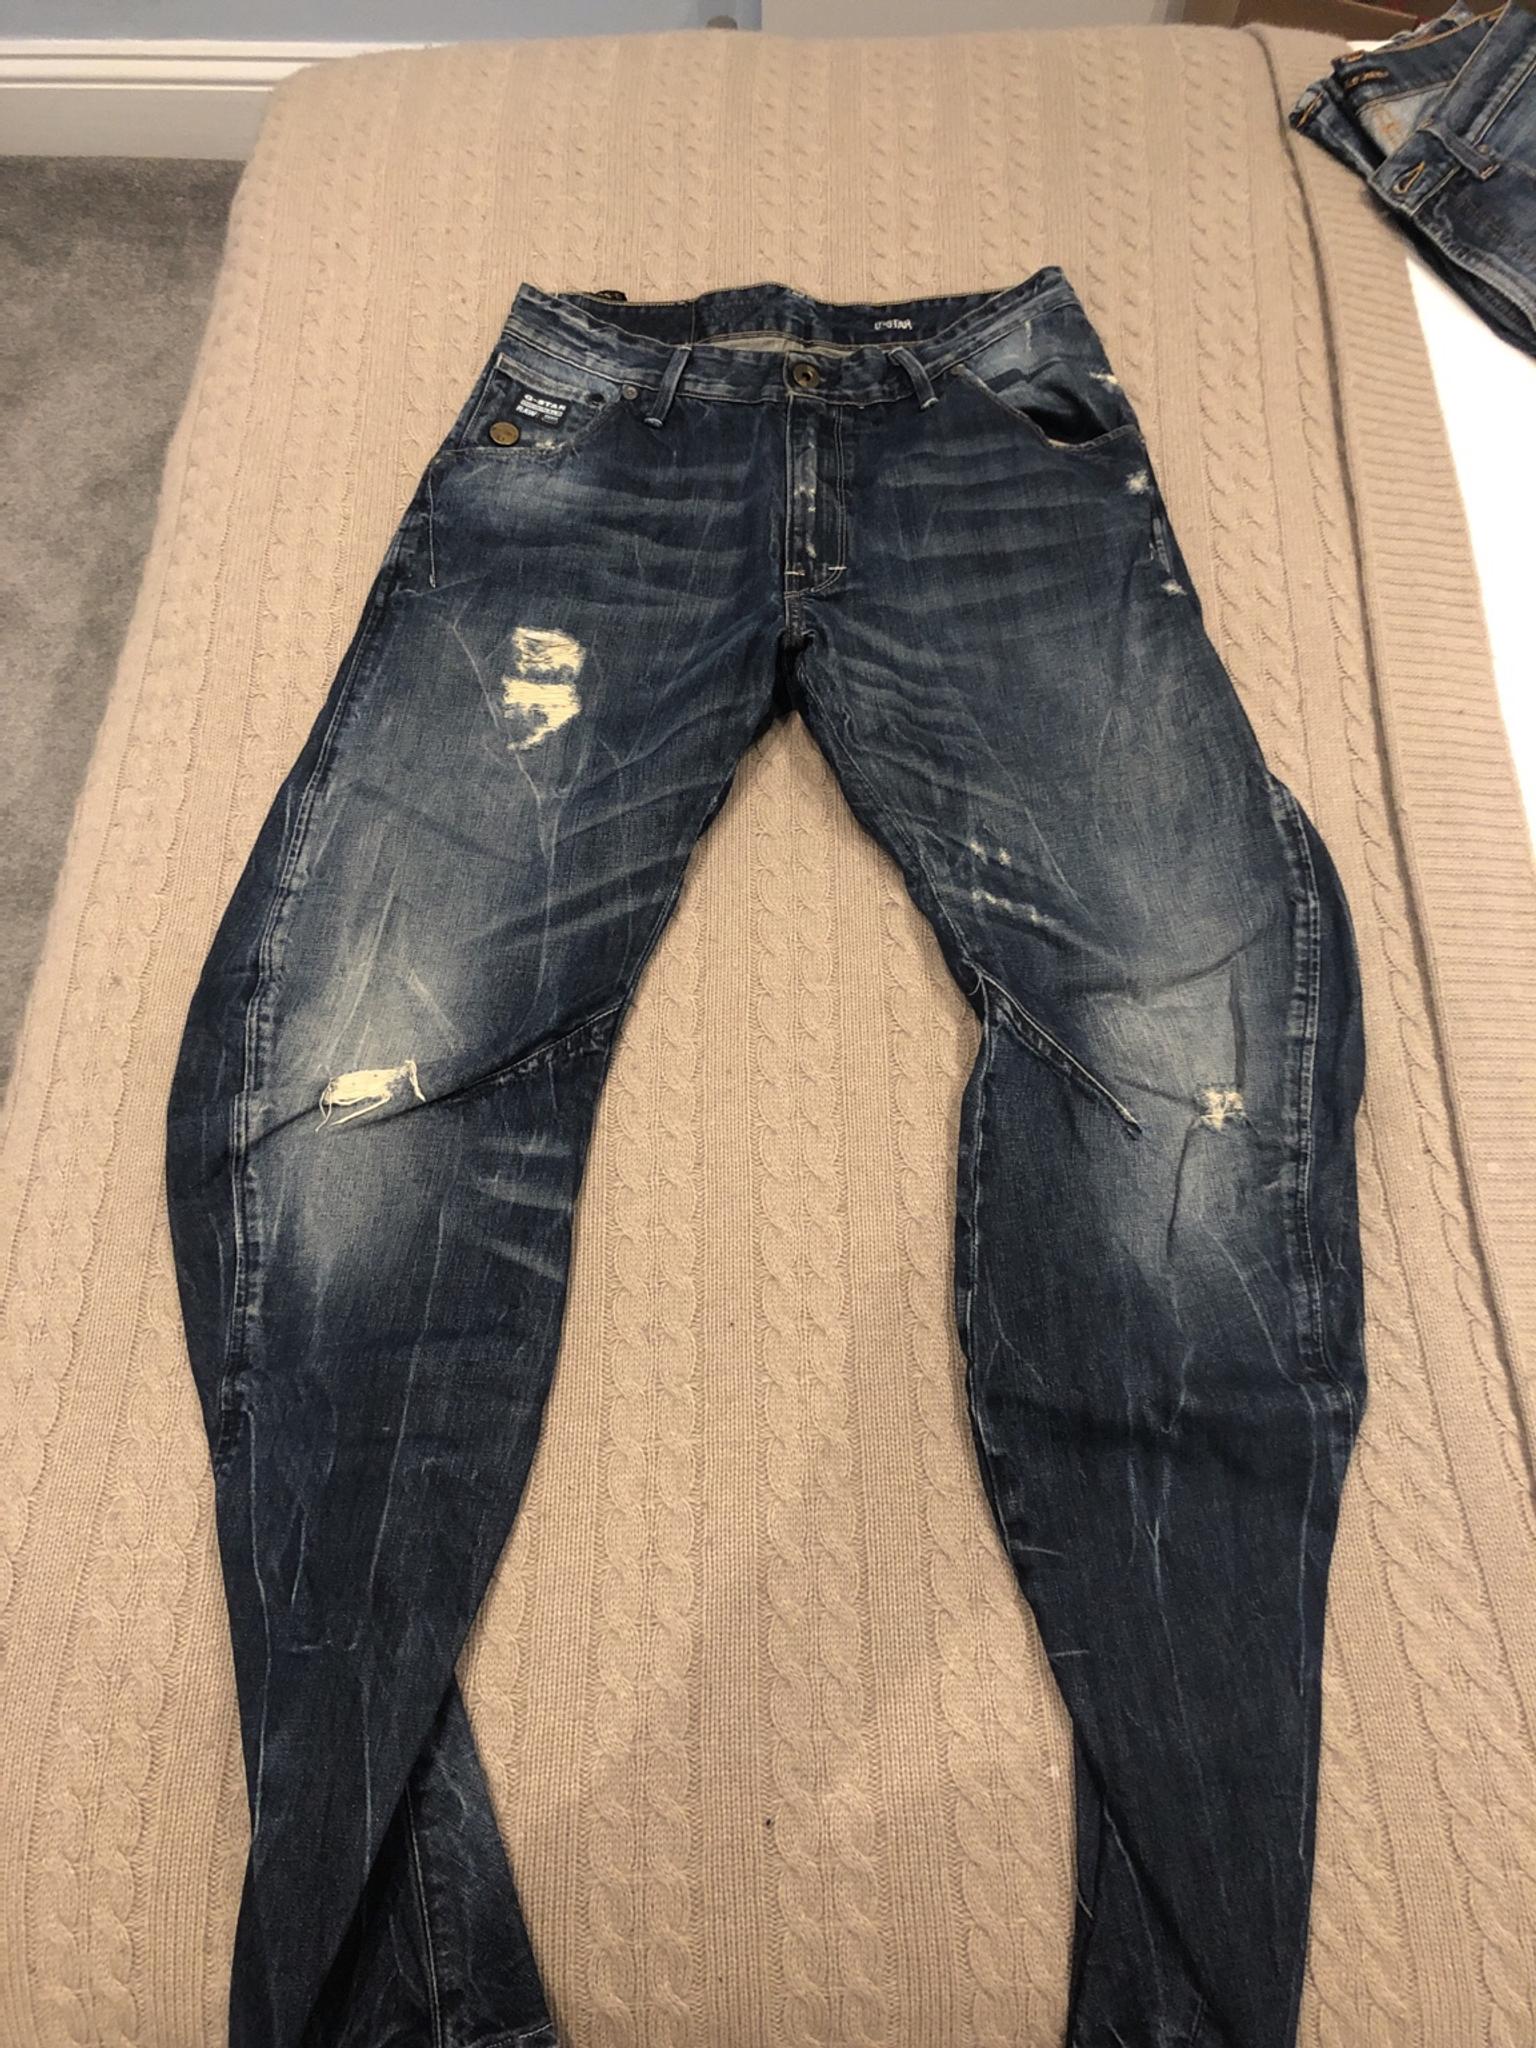 G-Star twisted \u0026 ripped jeans. Waist:30 